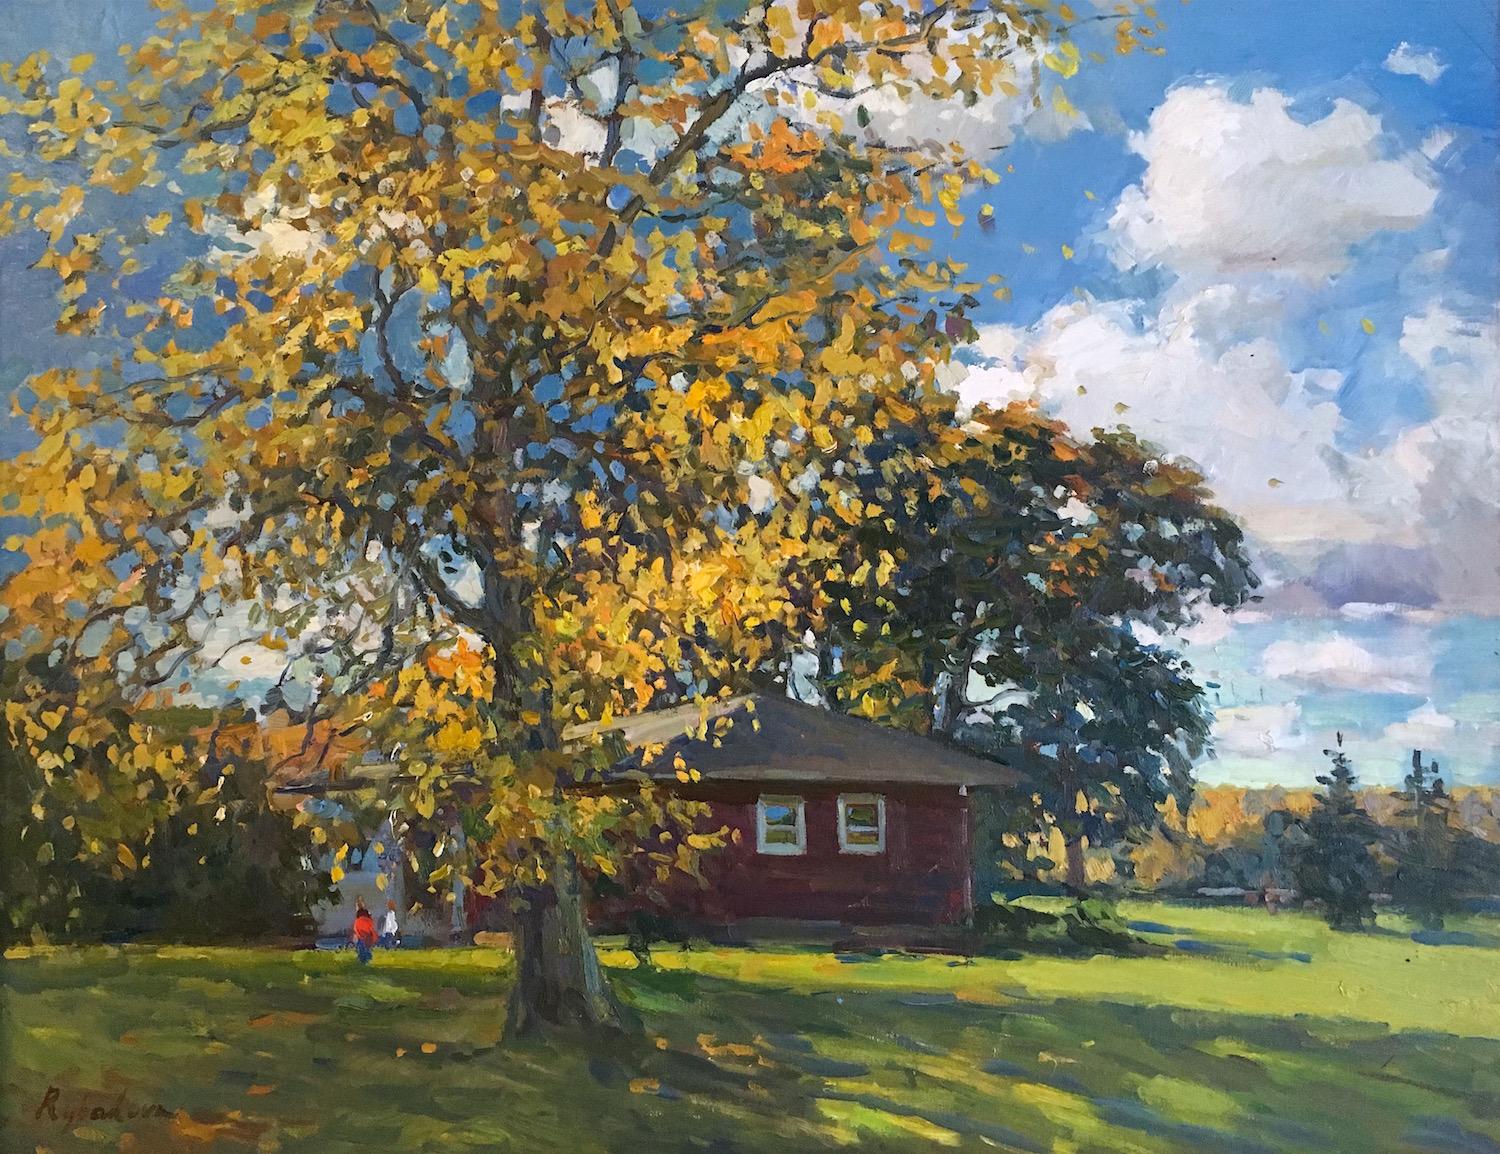 Landscape Painting Irina Rybakova - "Arbre jaune, grange rouge" Paysage rural impressionniste contemporain en plein air.